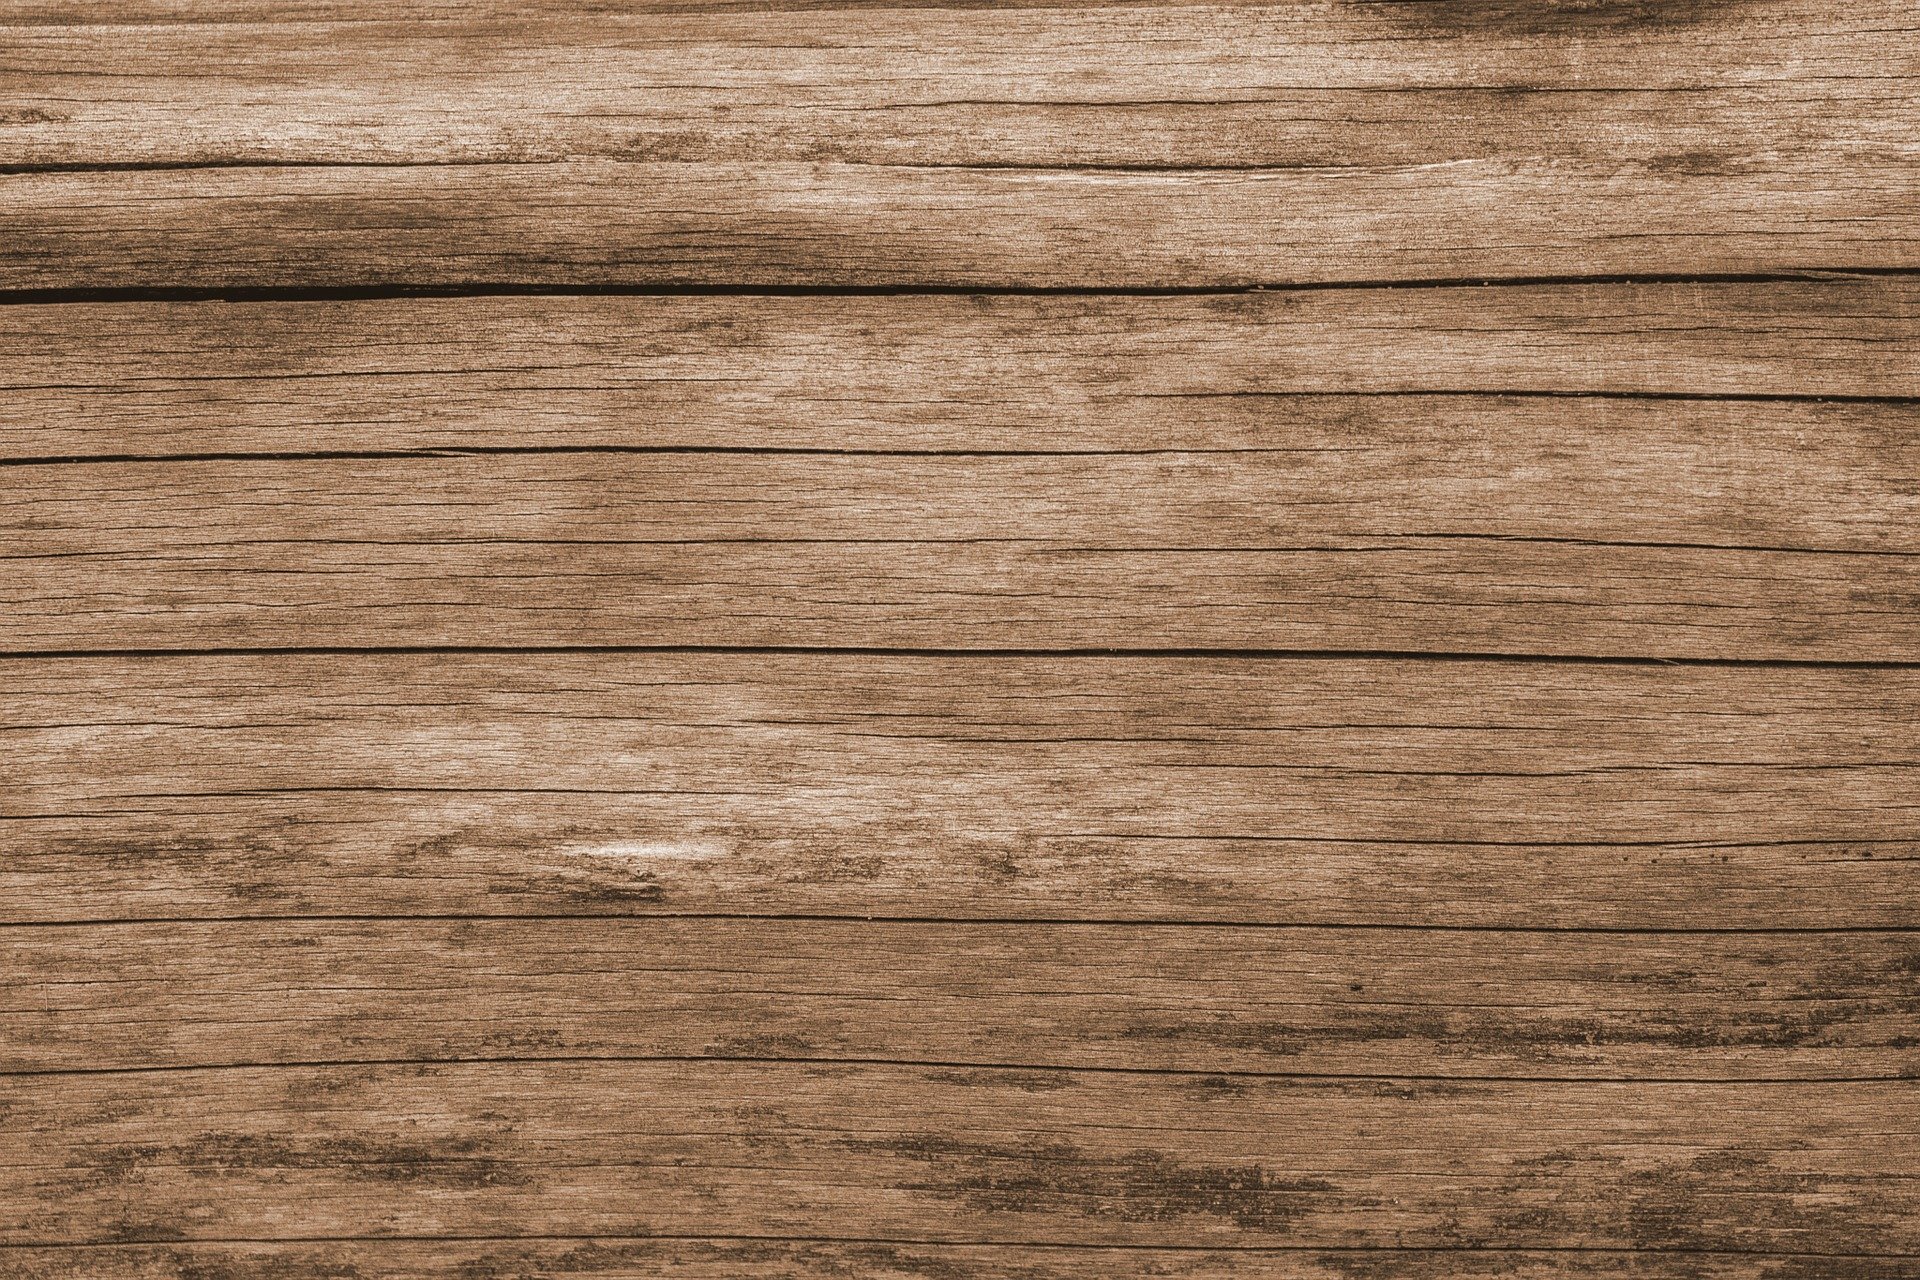 a close-up of woodgrain